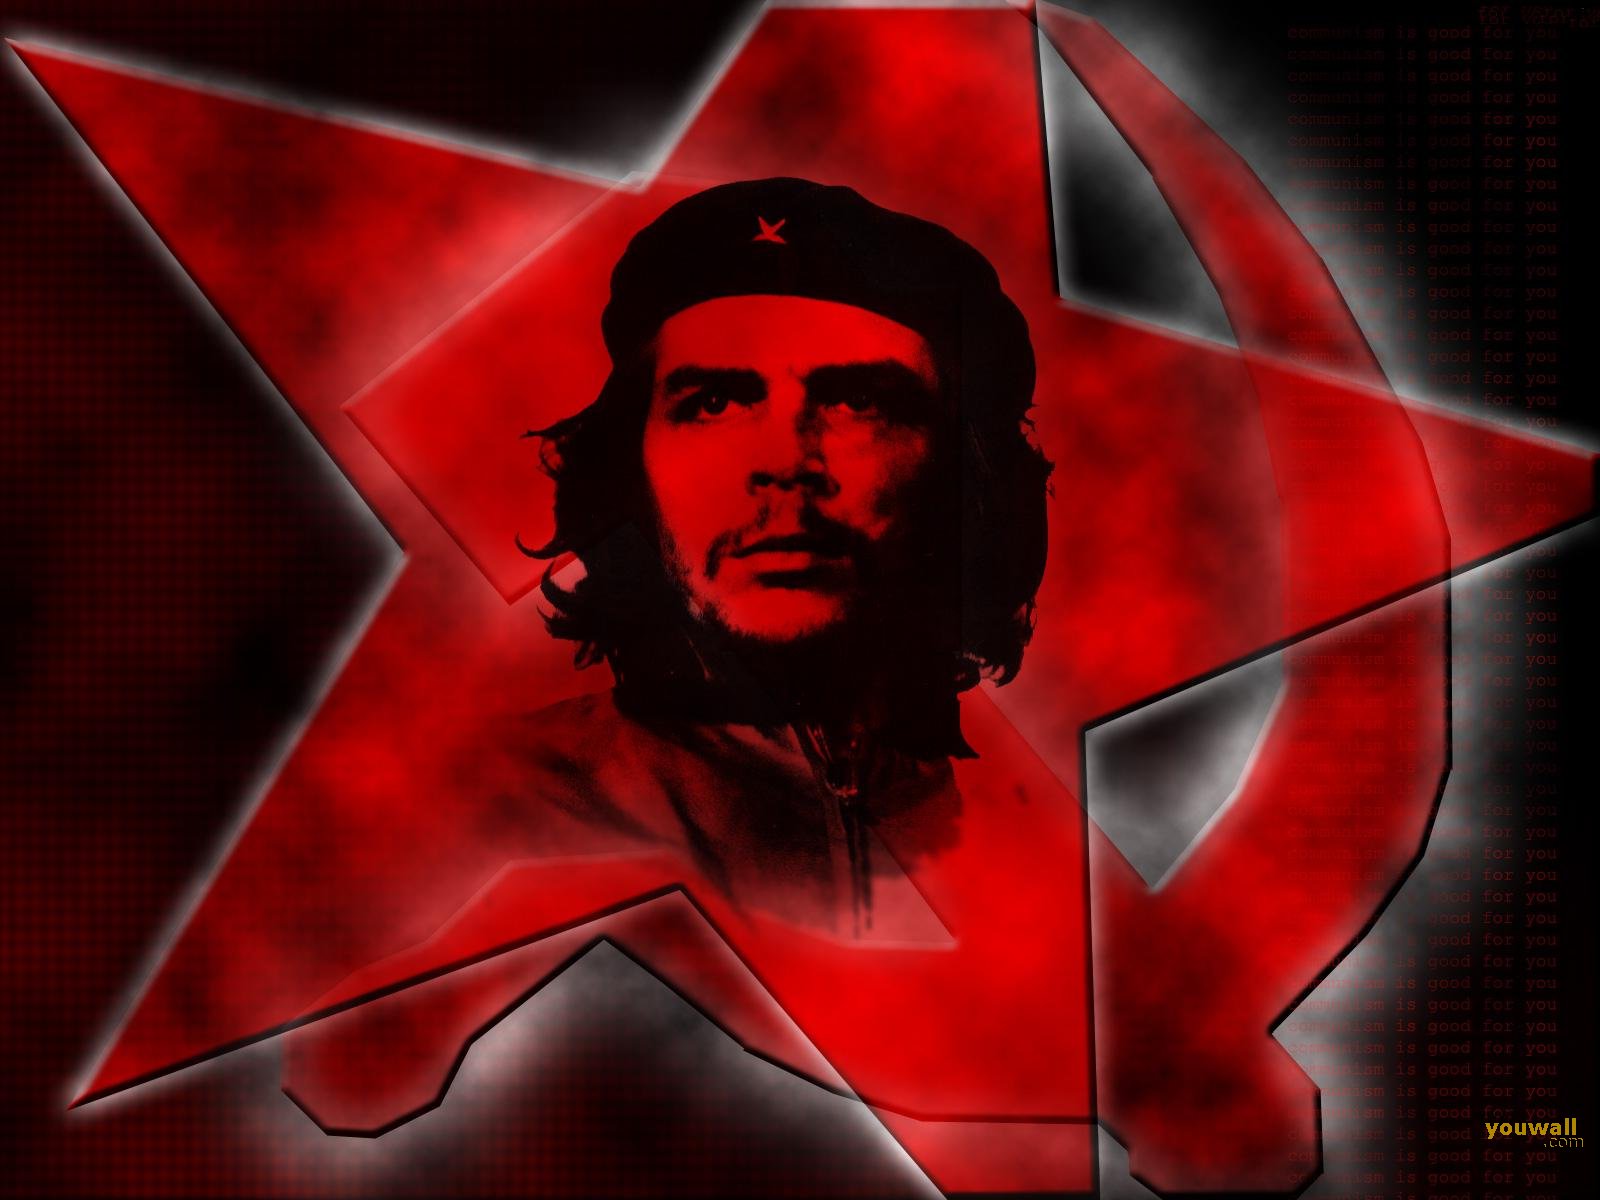 Picture Gallery 1080p Che Guevara Wallpaper